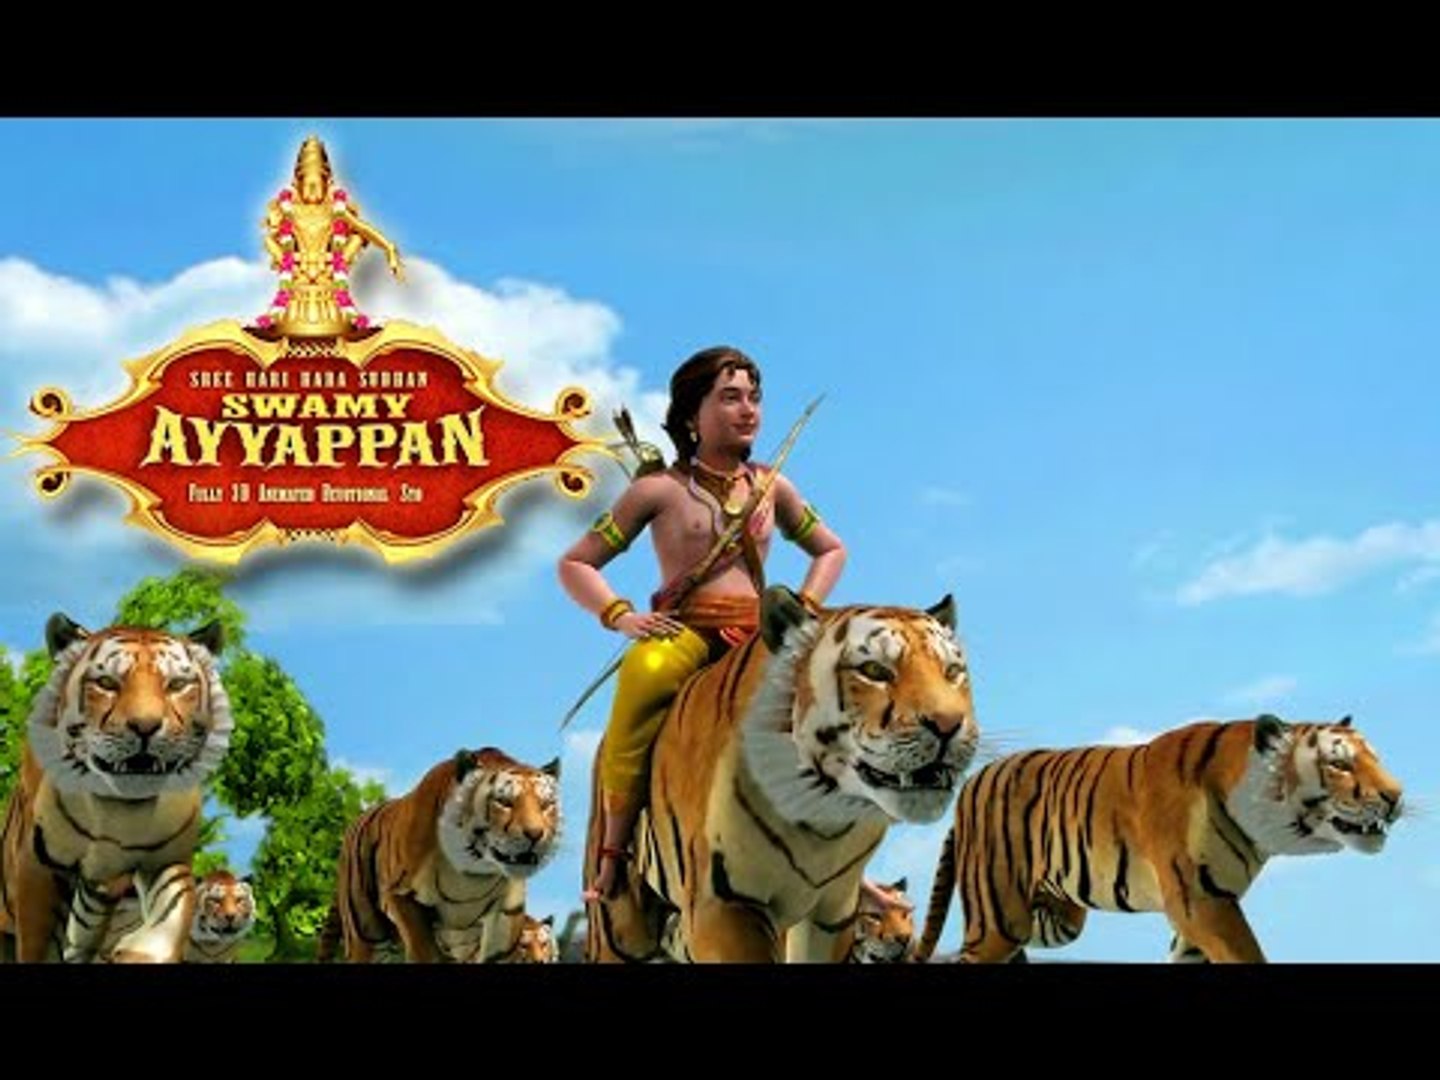 Ayyappan Video Songs In Tamil 2015 || Ayyappa Devotional Songs Tamil 2015  [HD] - video Dailymotion